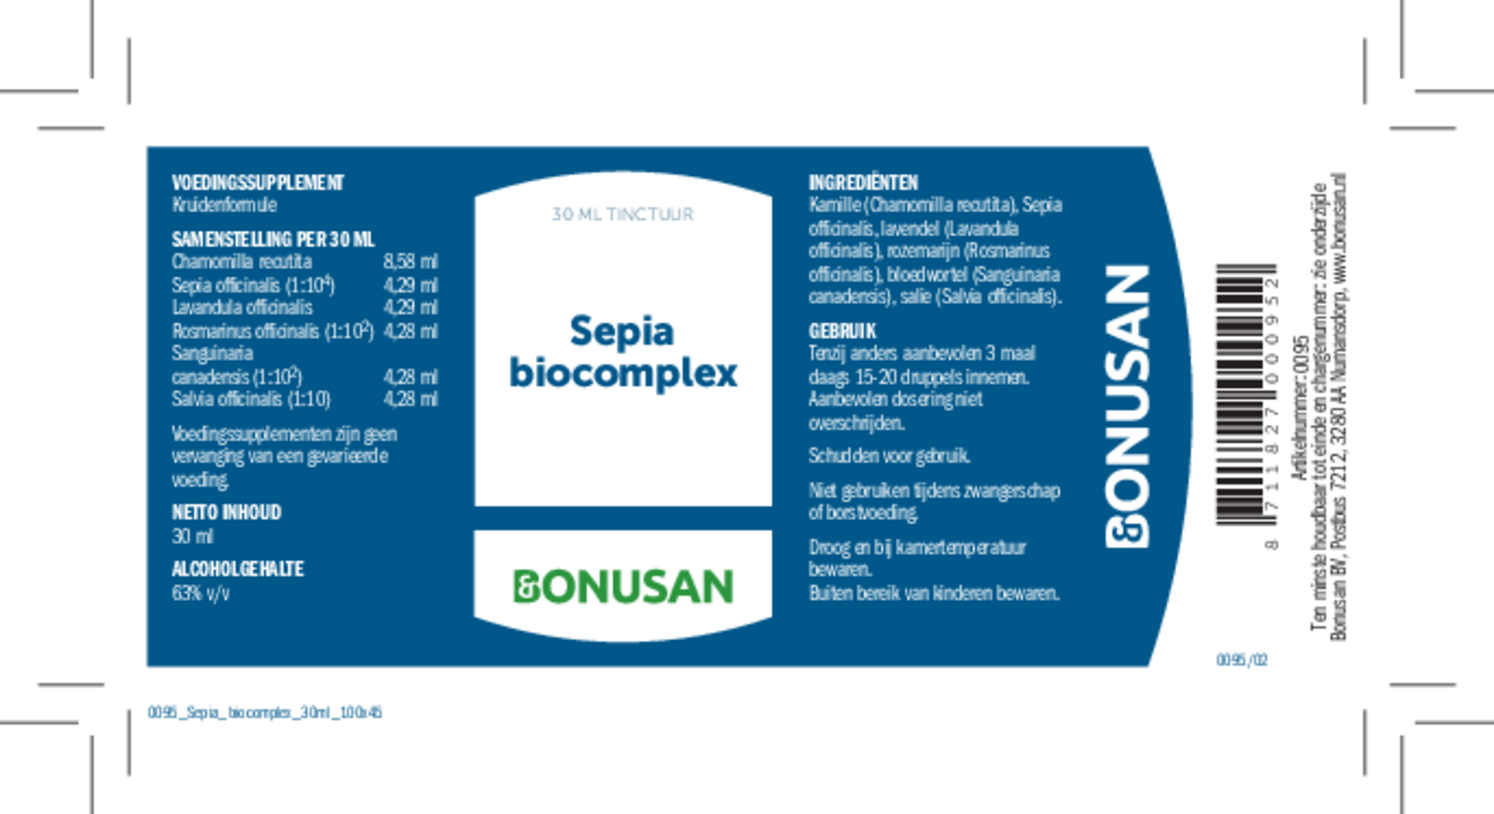 Sepia Biocomplex afbeelding van document #1, etiket